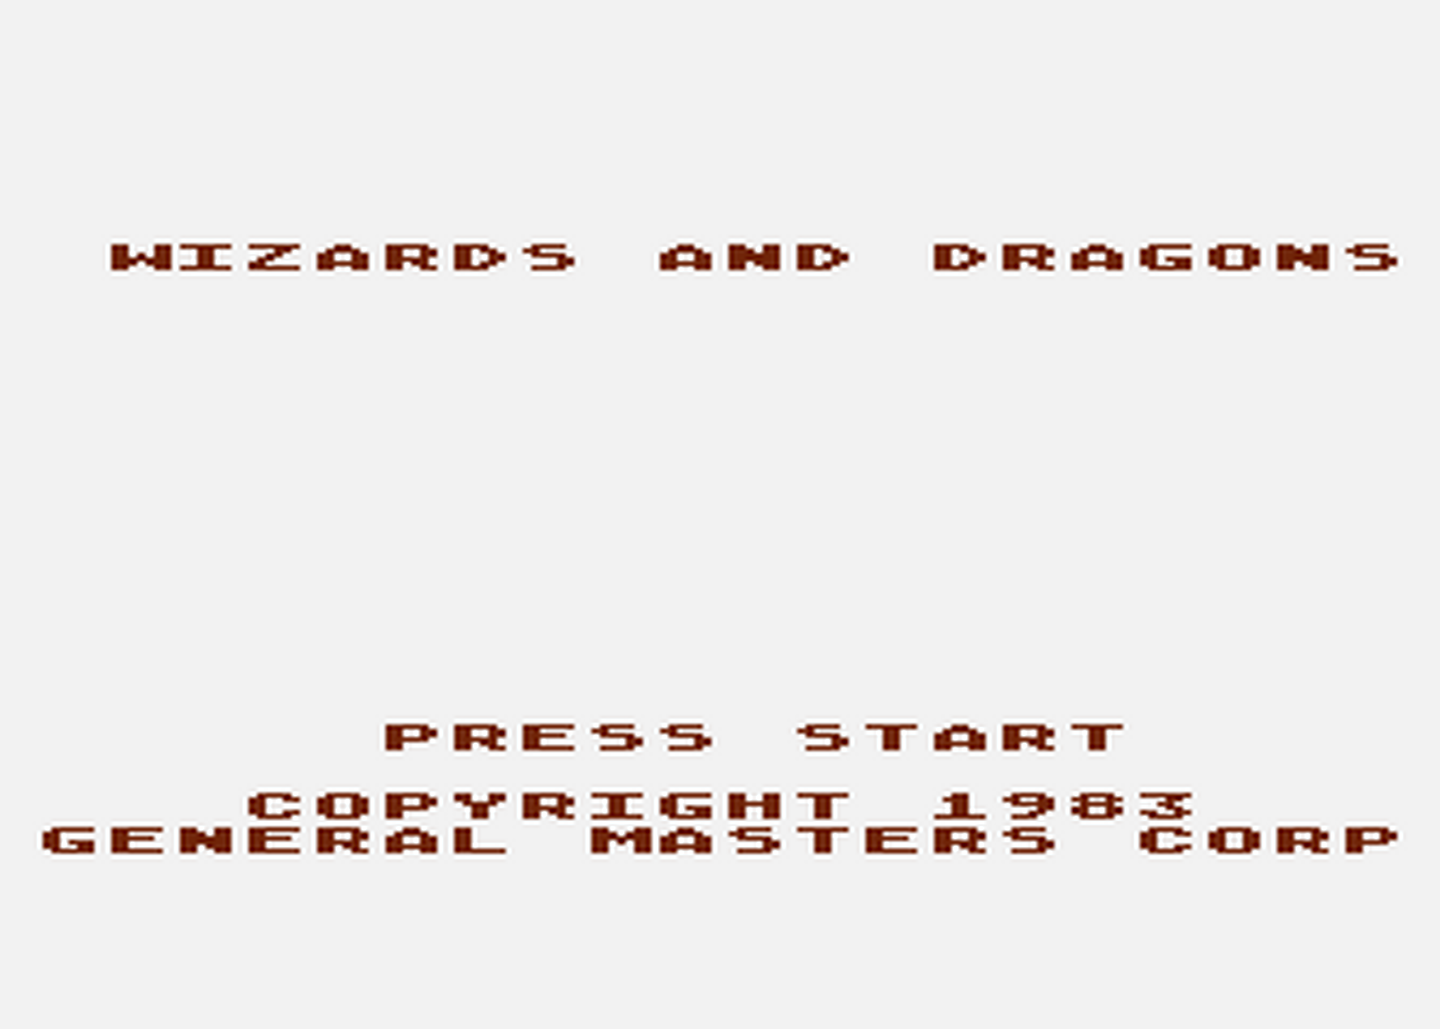 Atari GameBase Wizards_and_Dragons ALA_Software 1983